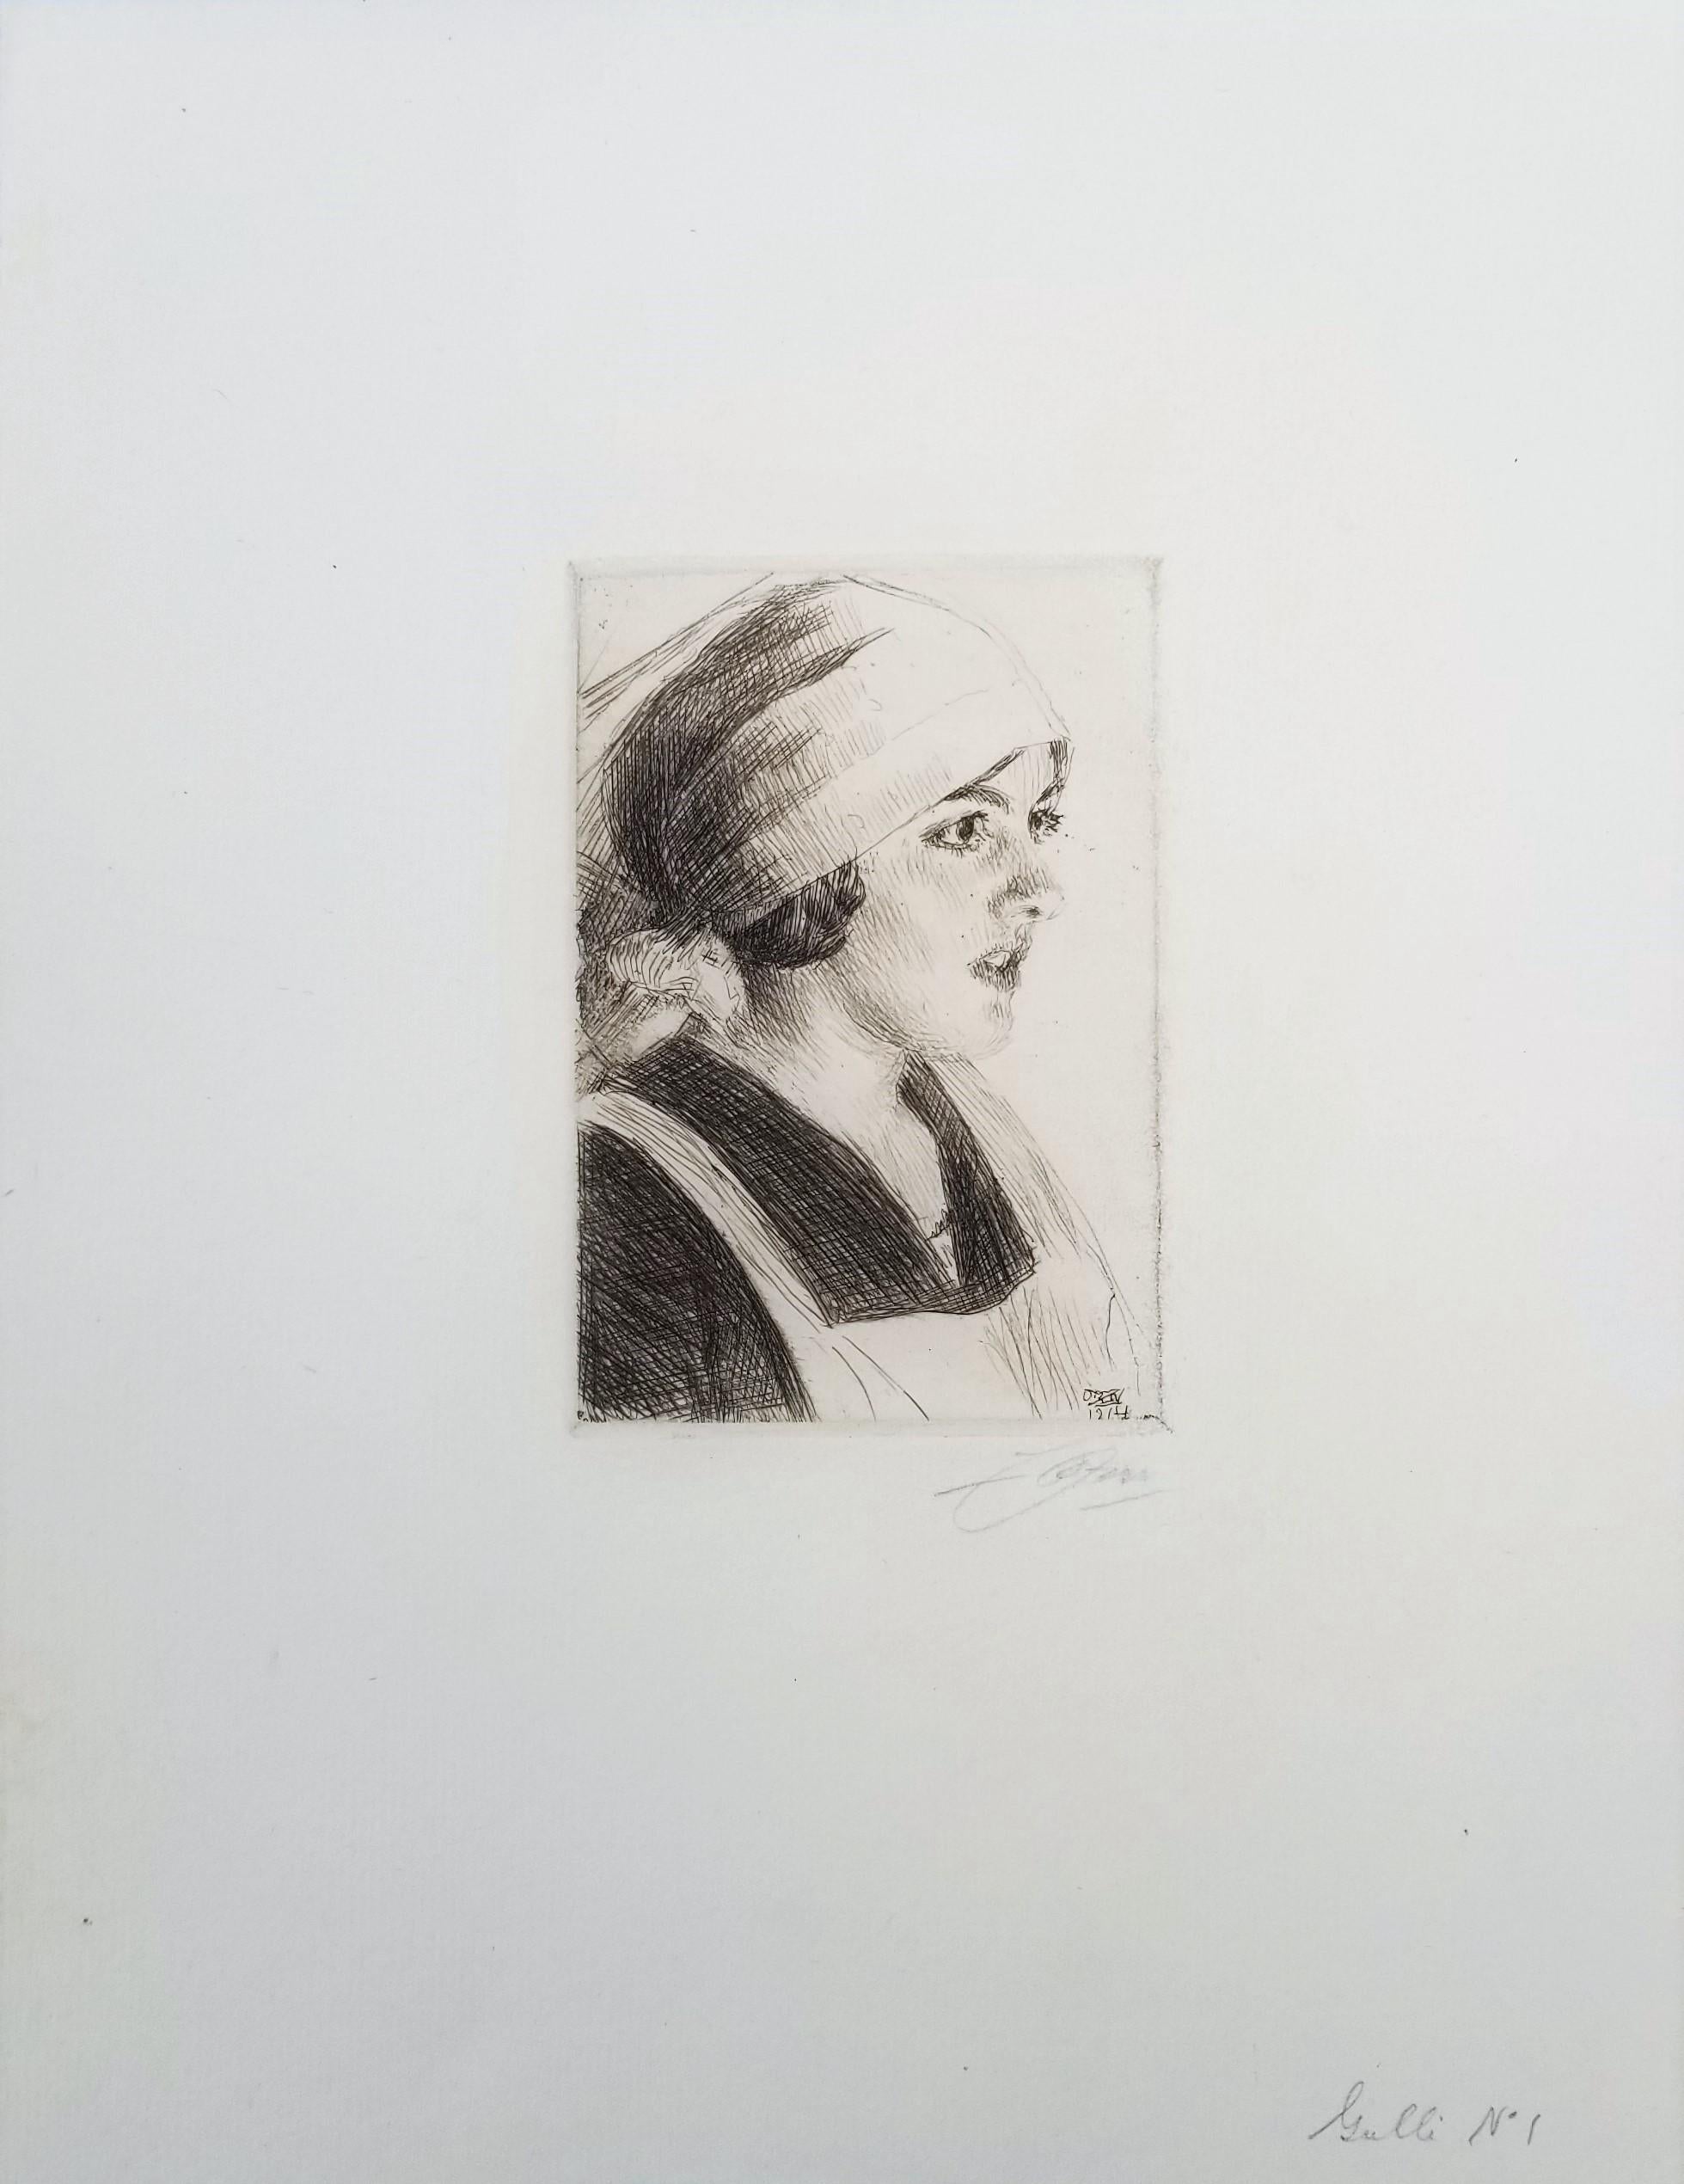 Artistics : Anders Zorn (suédois, 1860-1920)
Titre : 